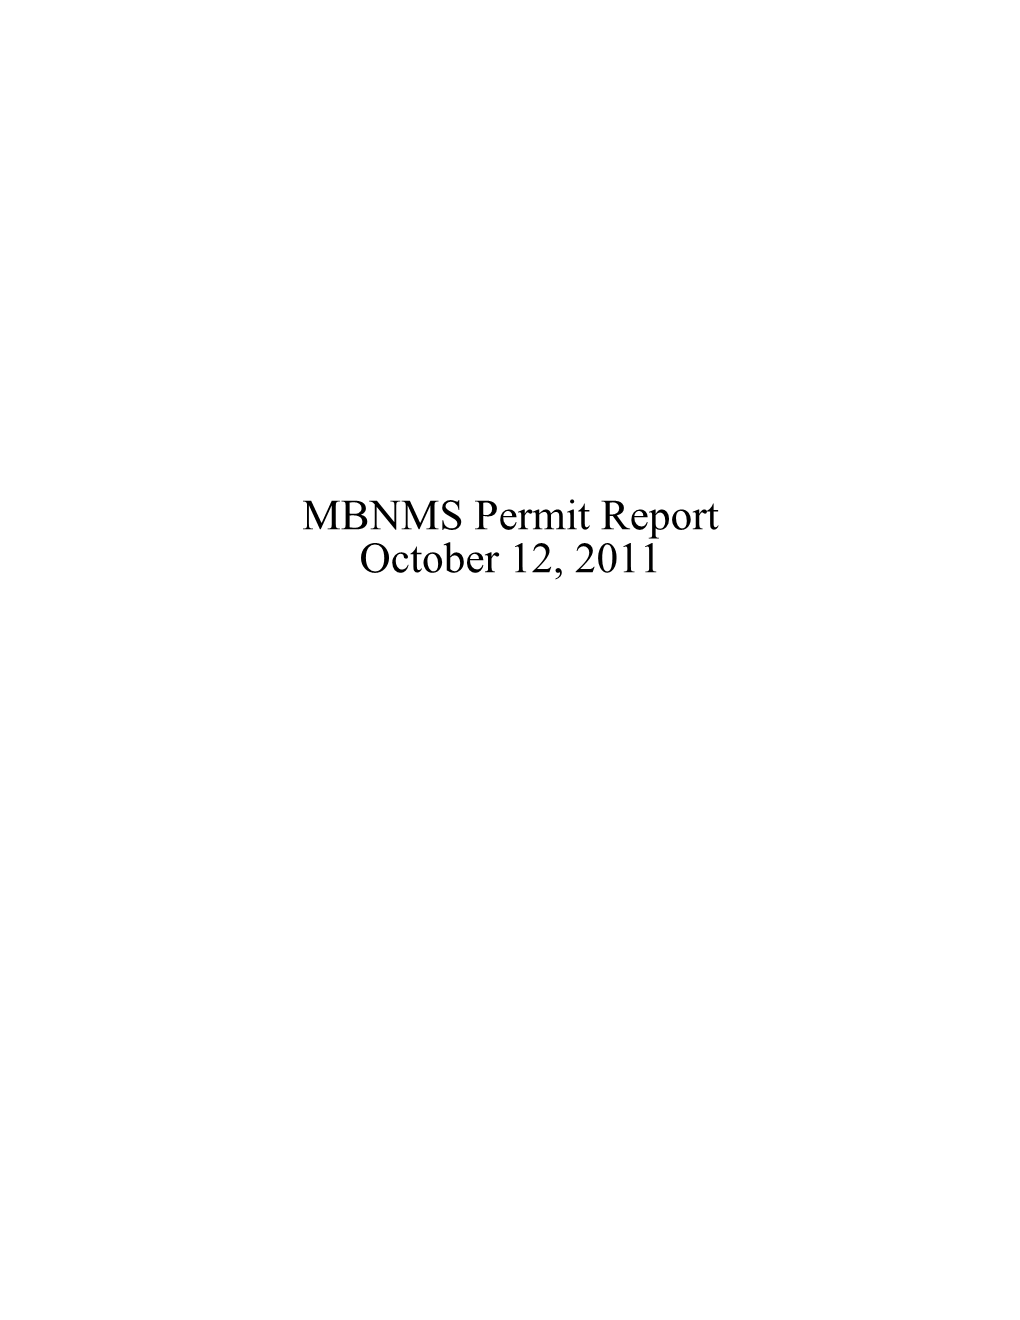 MBNMS Permit Activity Report 10/12/11